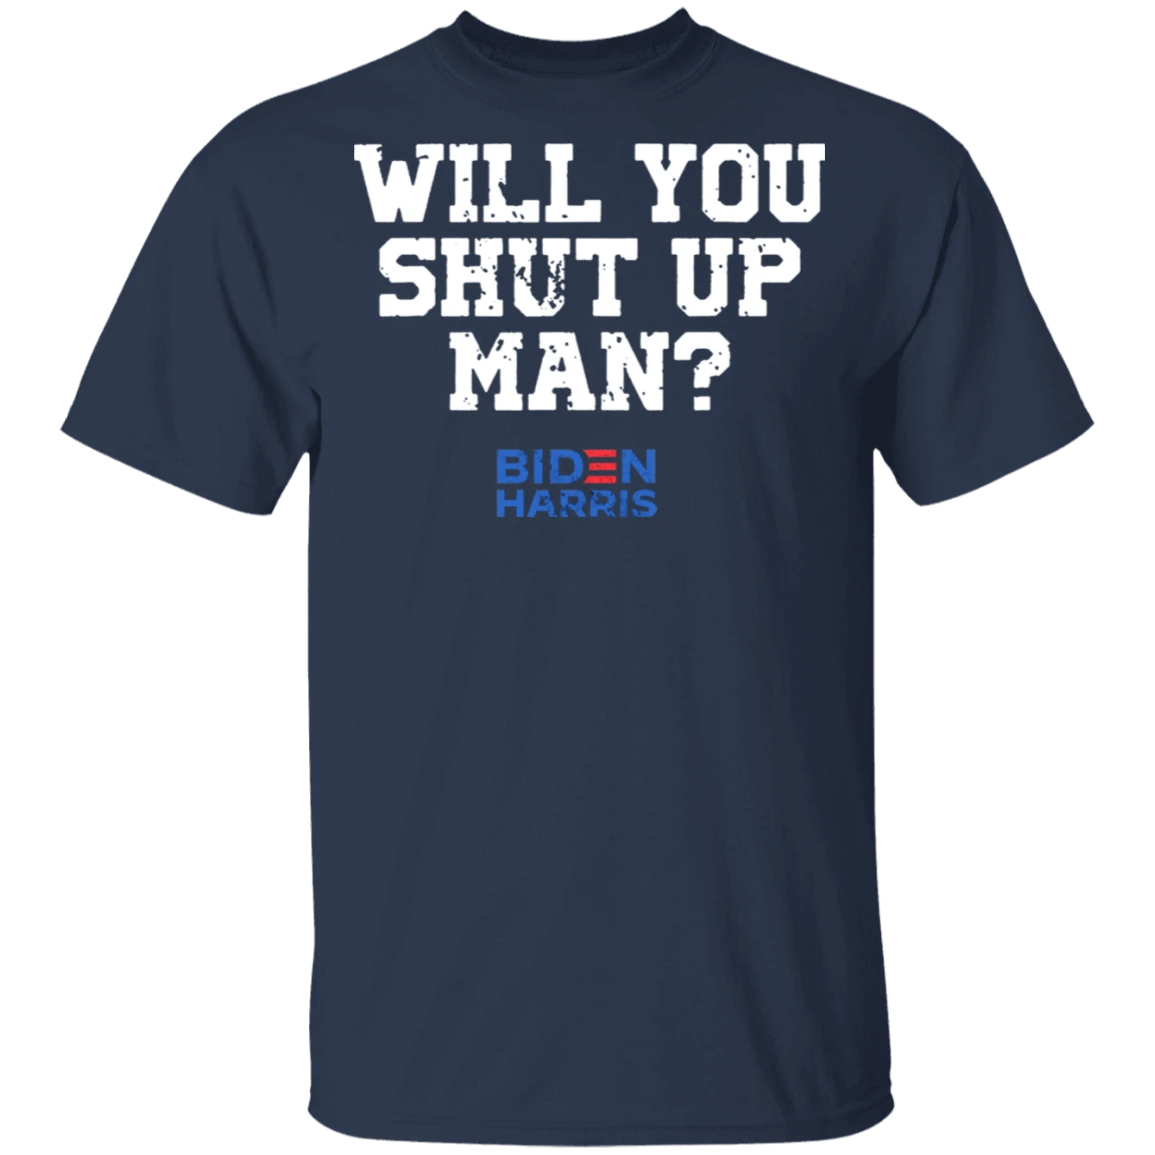 Biden Harris Will You Shut Up Man Shirt Biden Harris Shirt Vote Joe Biden For President 2020